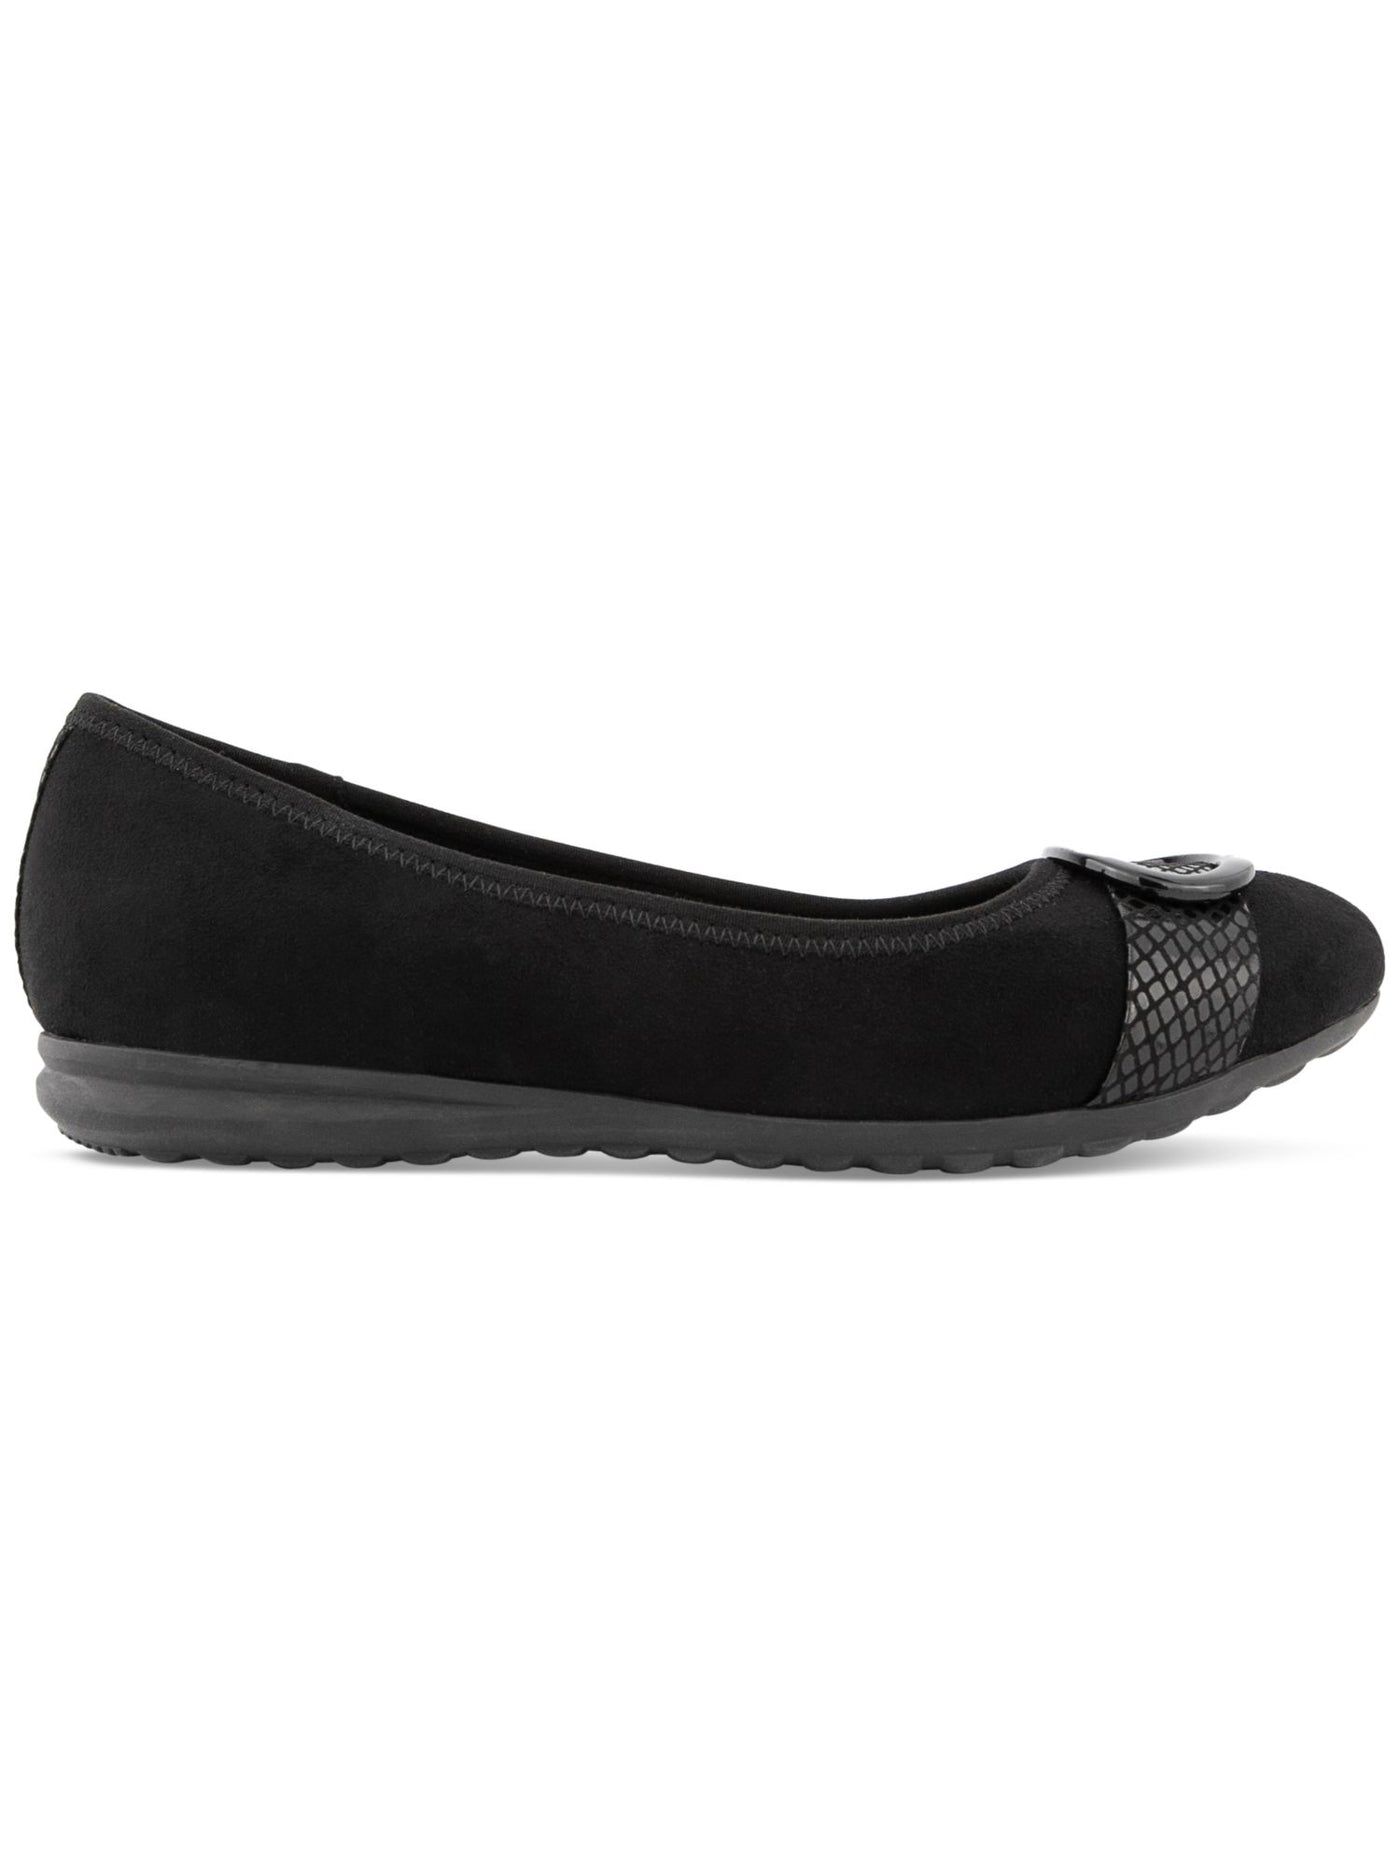 KAREN SCOTT Womens Black Cushioned Tashelle Round Toe Slip On Dress Flats Shoes 7 M